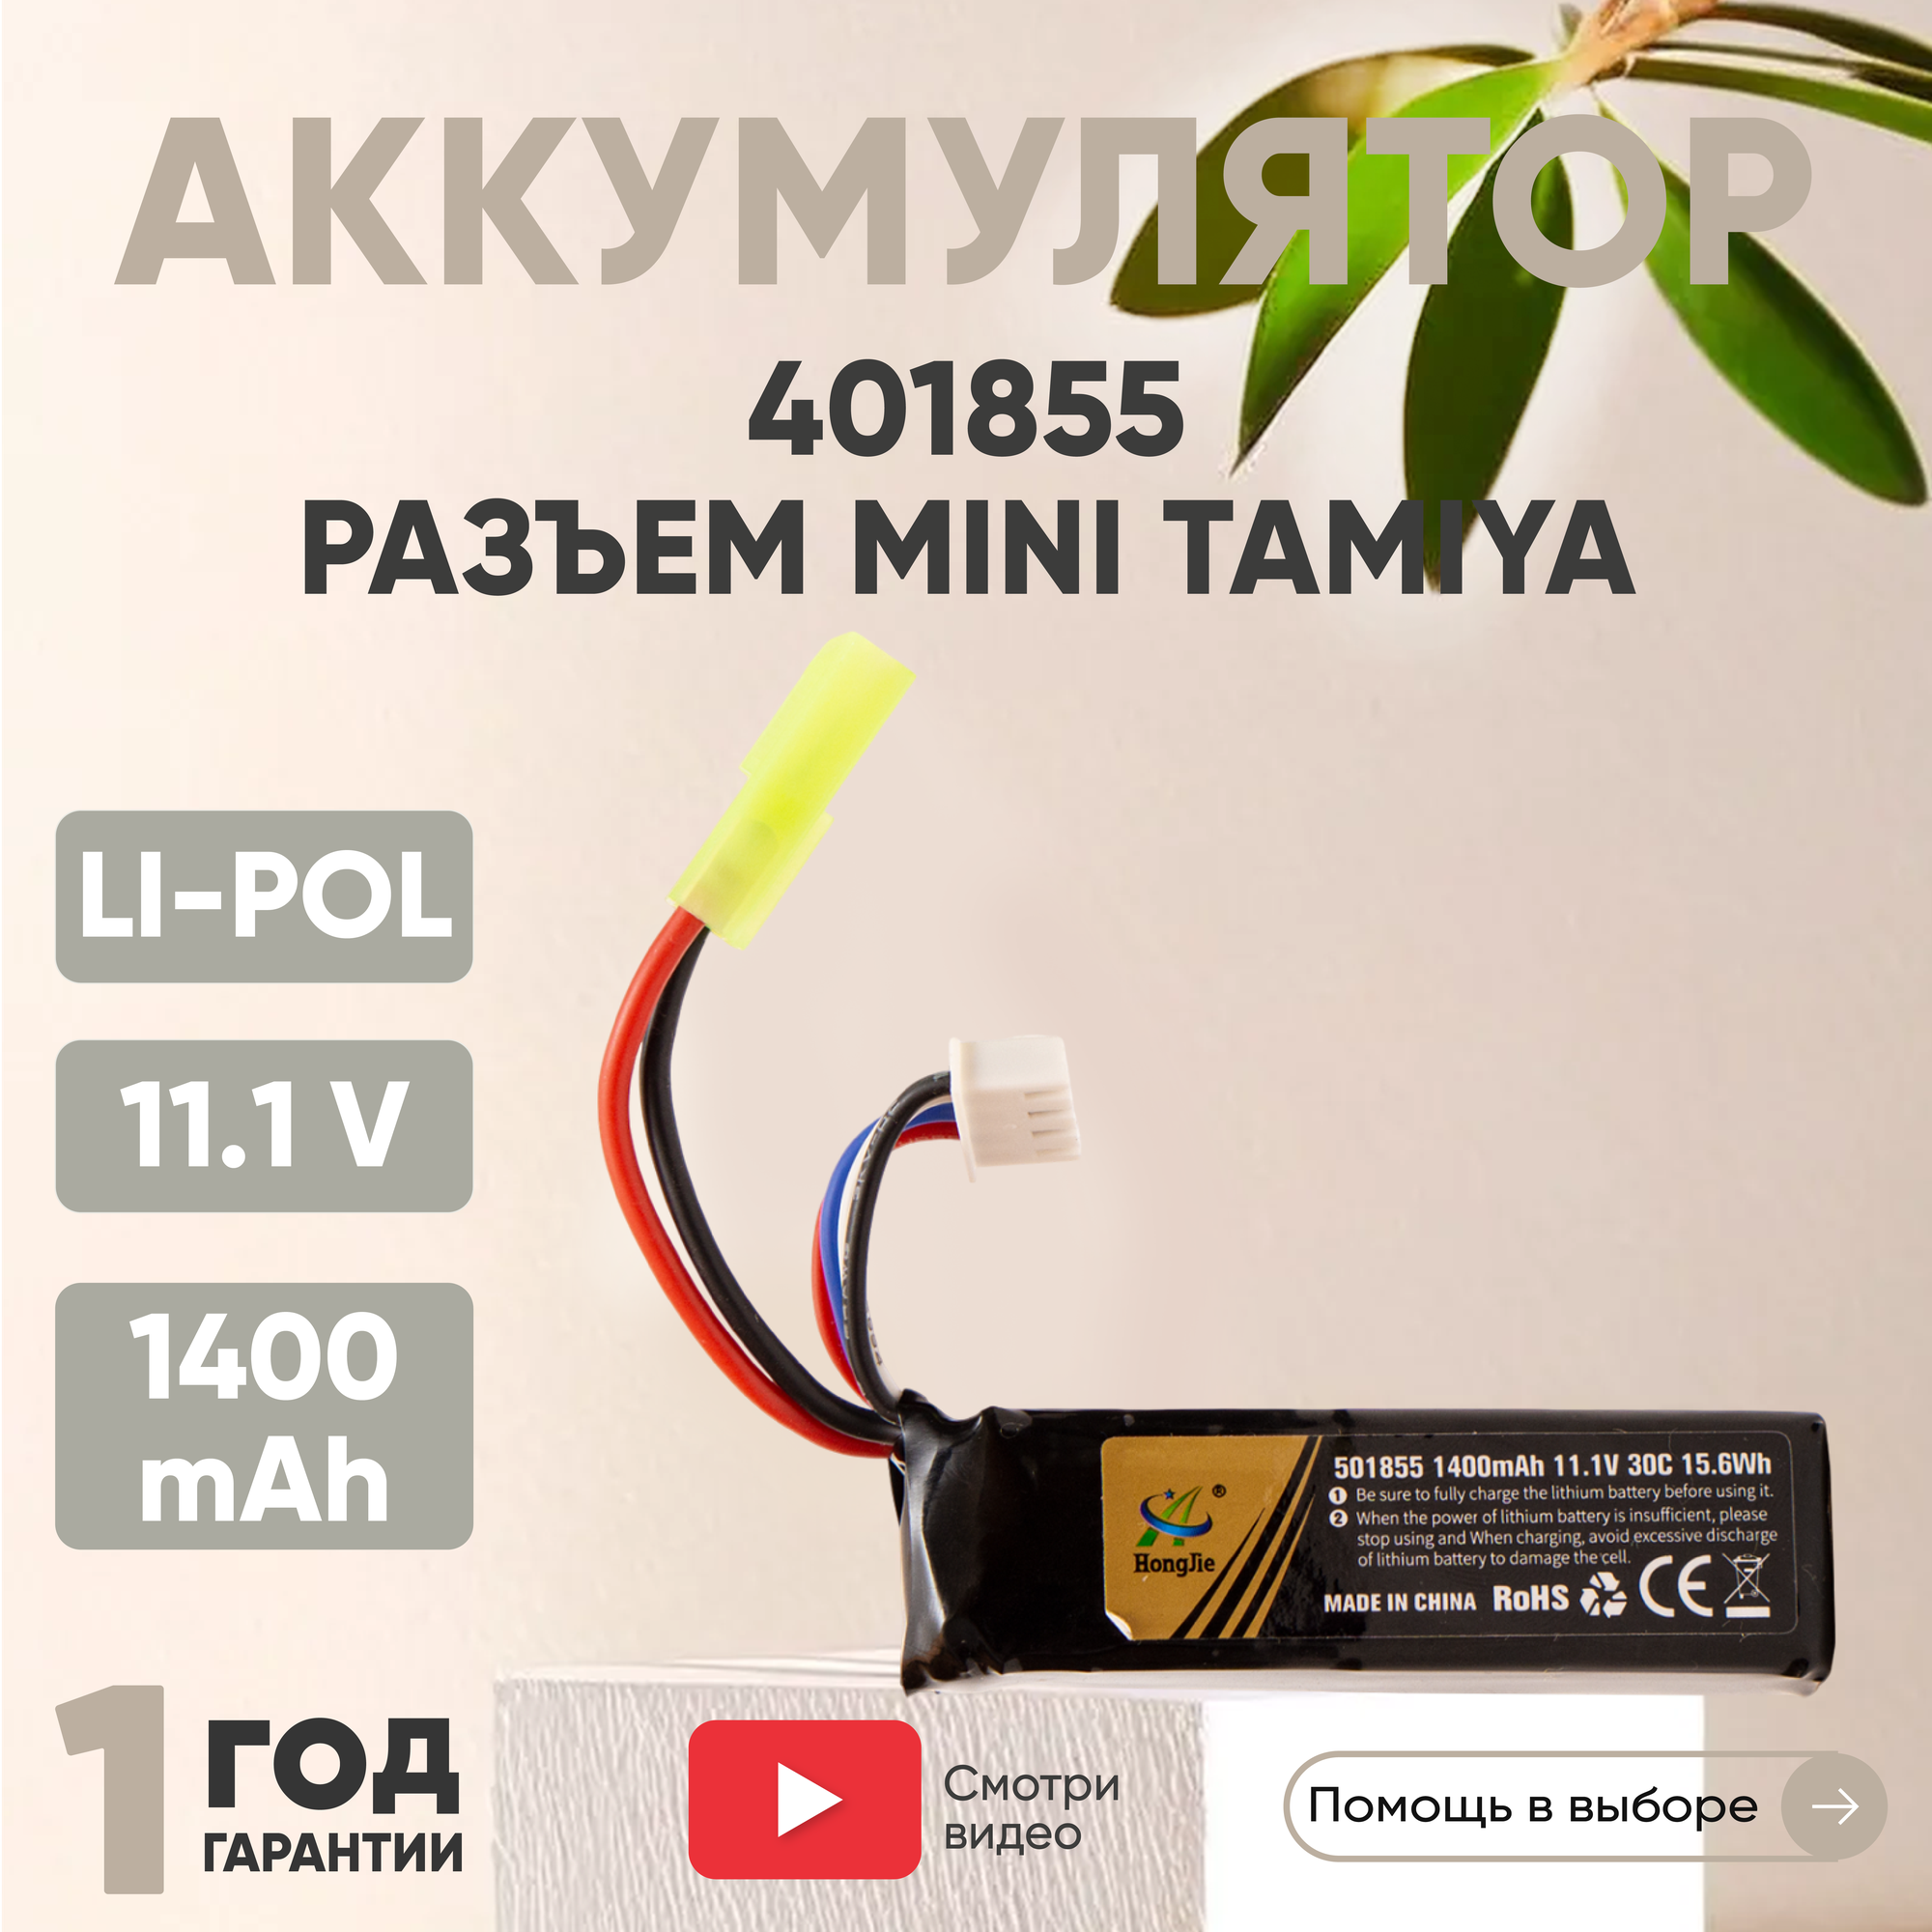 Аккумуляторная батарея (АКБ, аккумулятор) 401855, разъем Mini Tamiya Plug, 1400мАч, 11.1В, Li-Pol